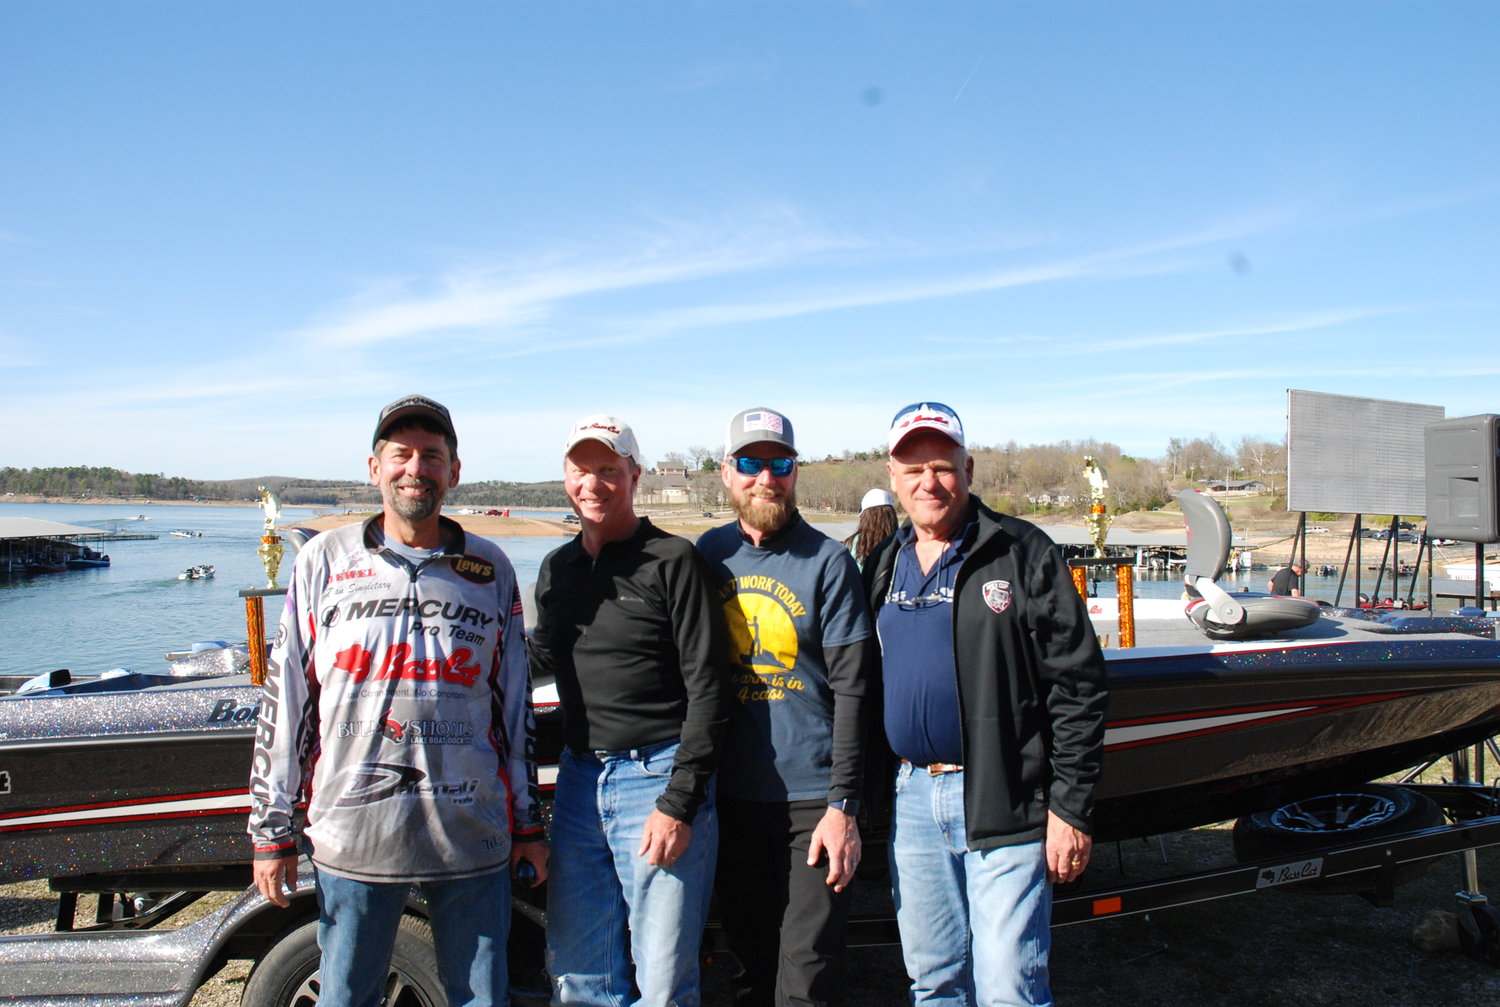 Dan Singletary, Tournament Director, 1st place winners Rick and Jason Schmeski and Rick Pierce, BassCat Boats.